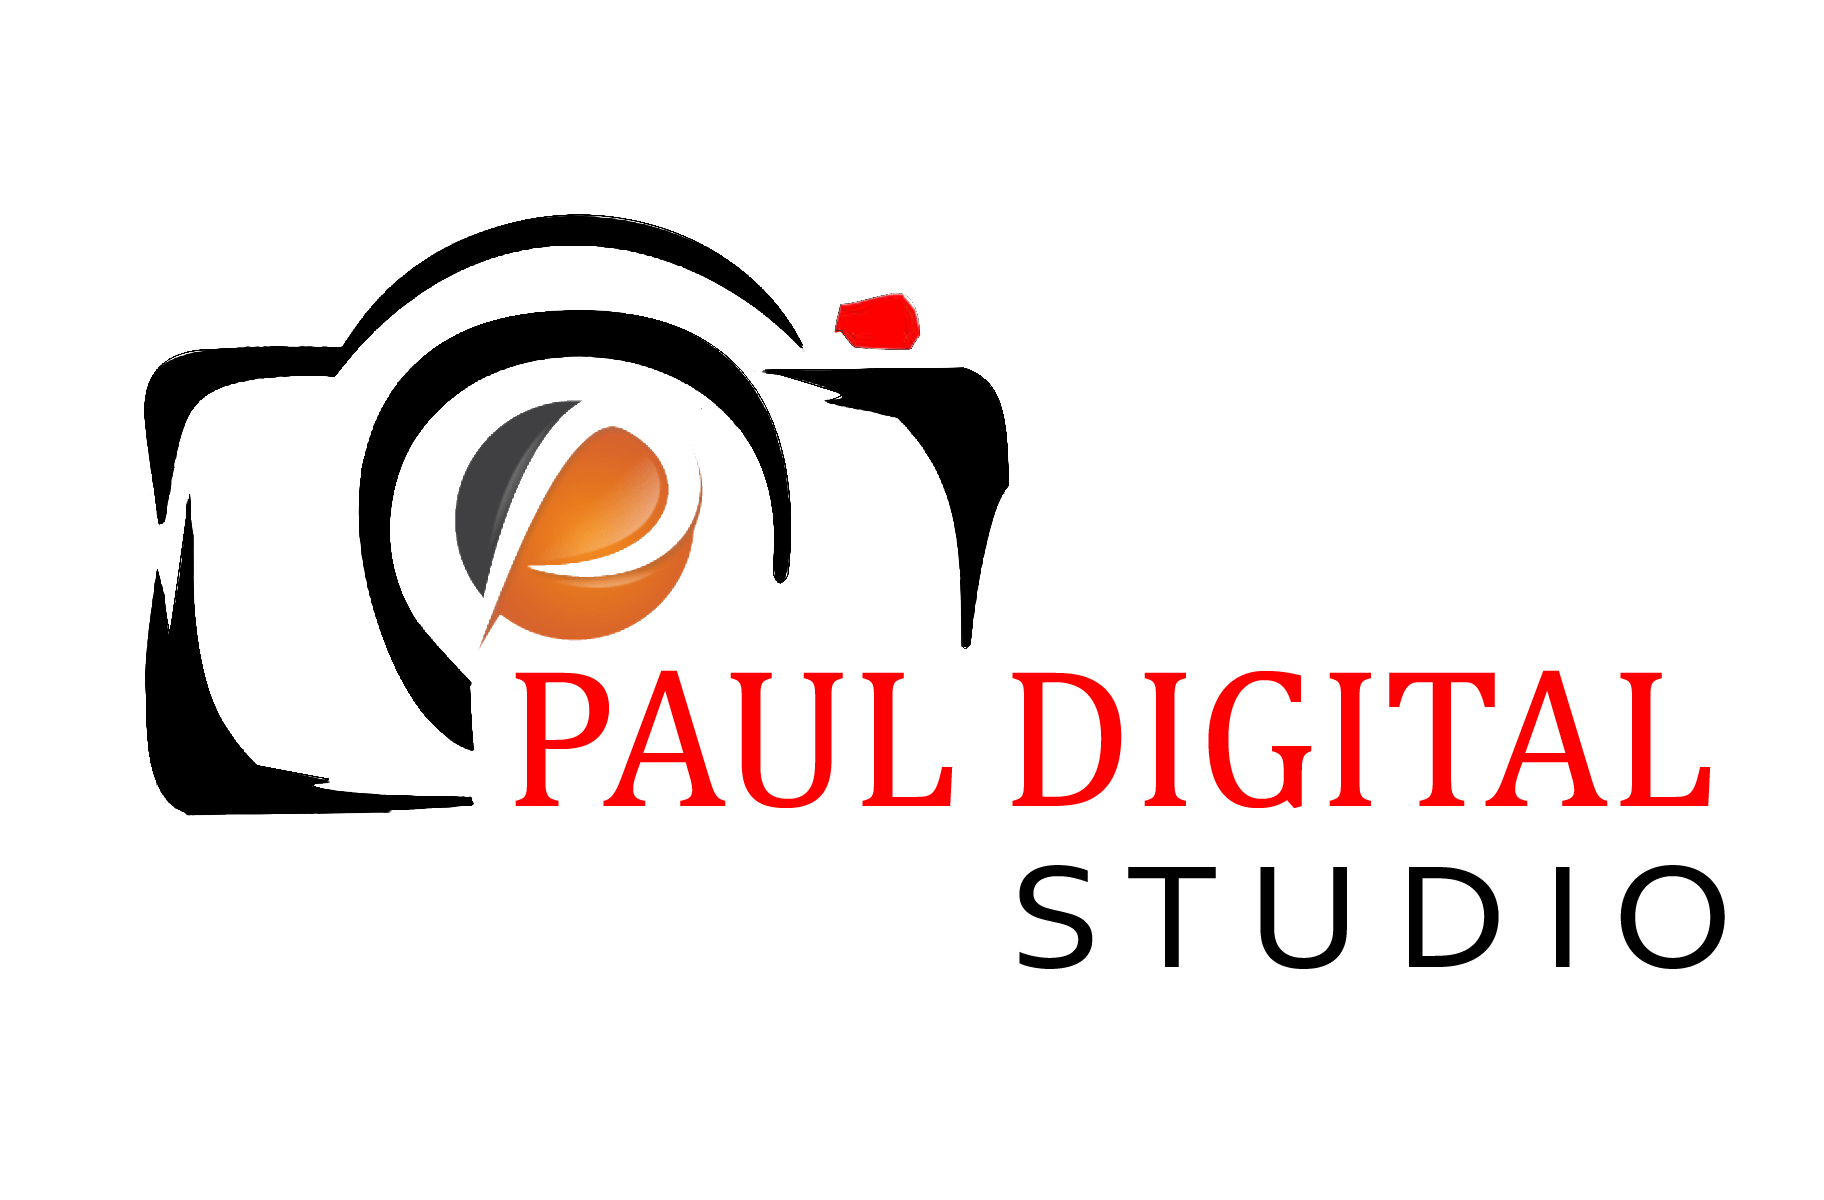 Photography Studio Logo - Photography studio logo png » PNG Image